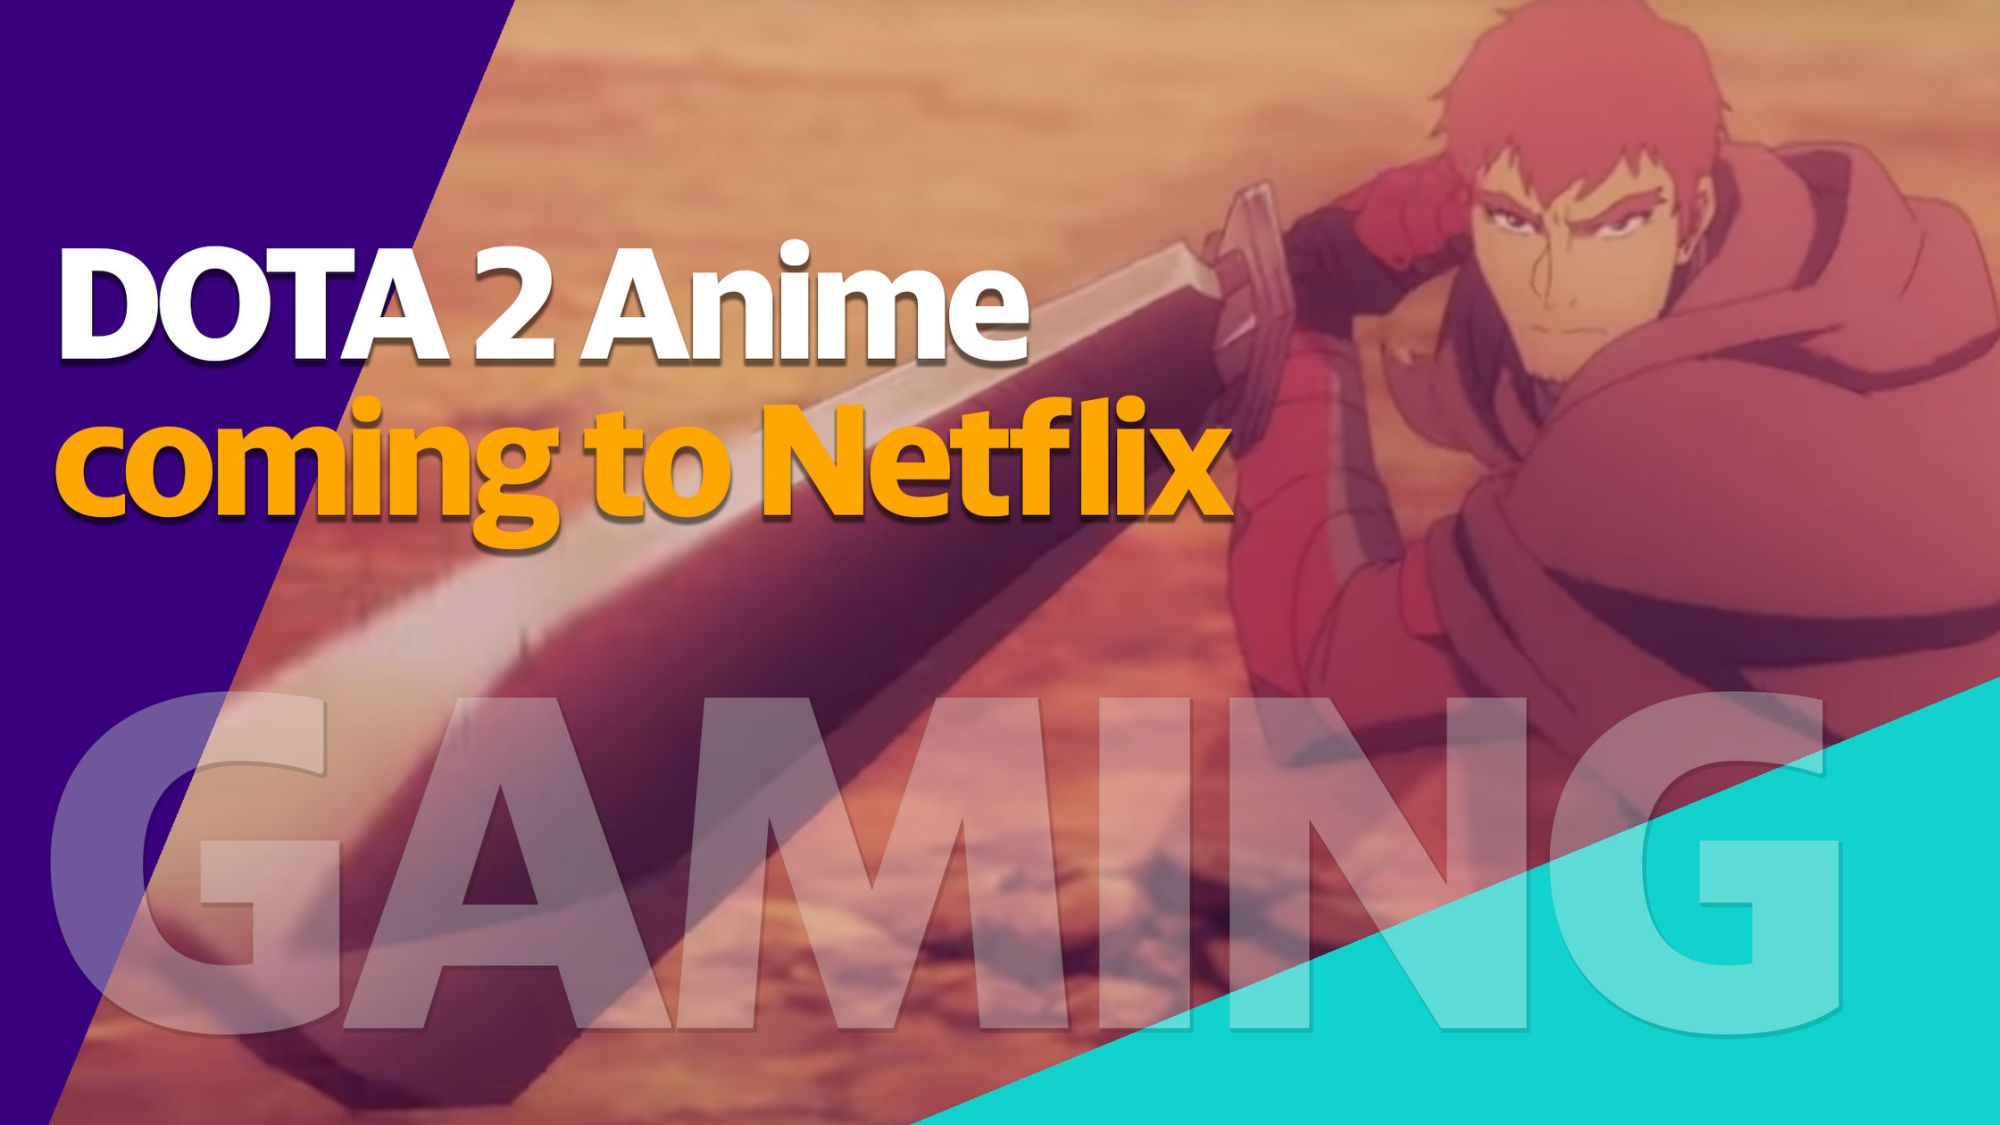 Netflix announces new Dota 2 anime